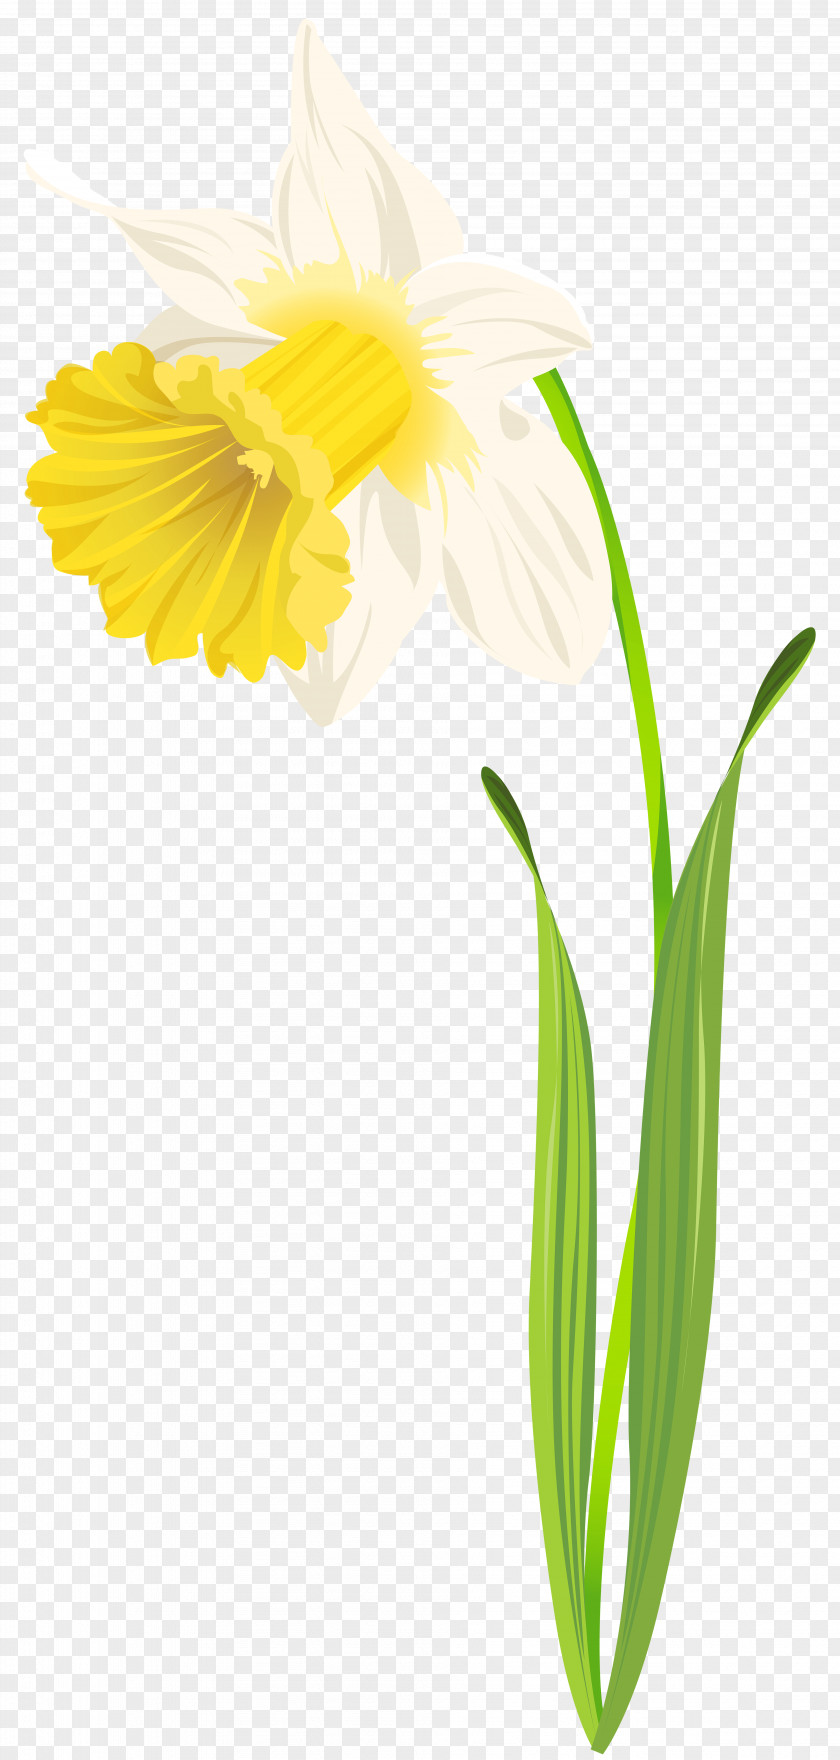 Grasshopper Daffodil Flower Clip Art PNG